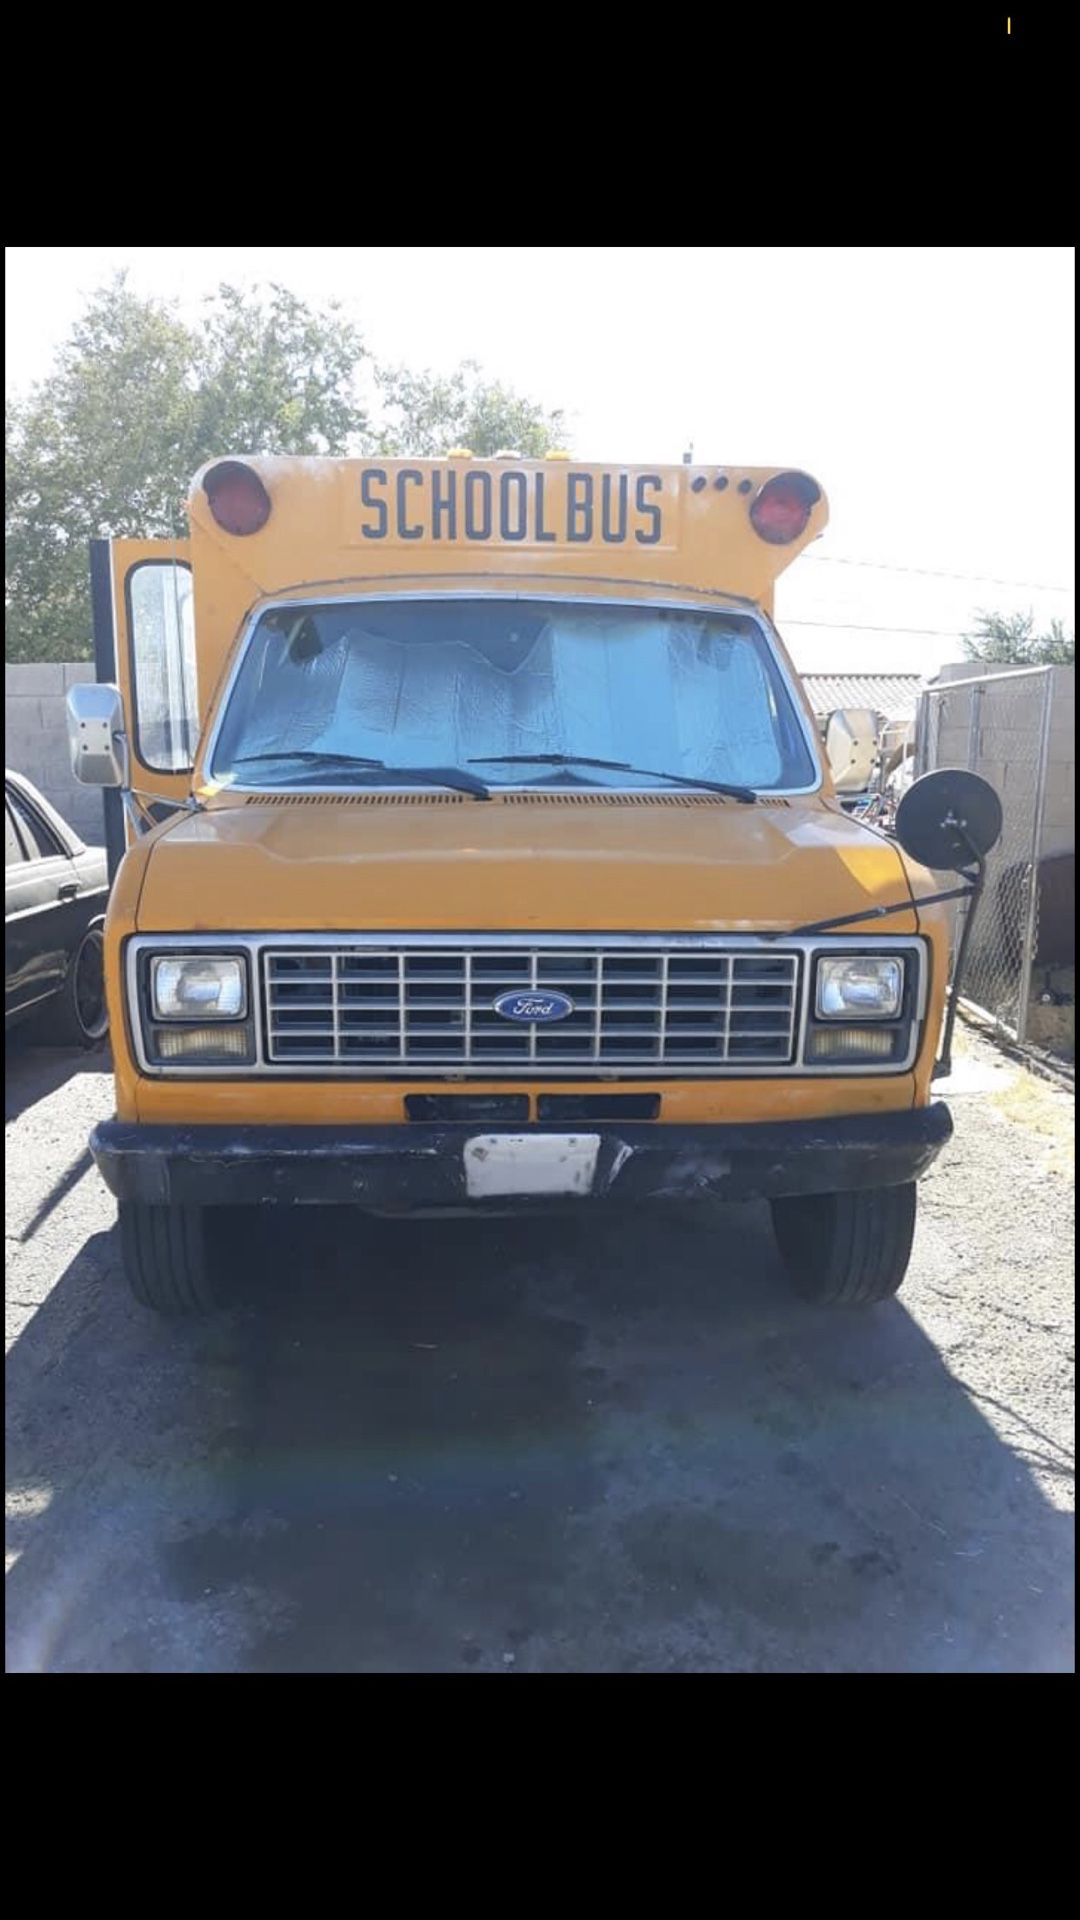 E350 1989 School Bus